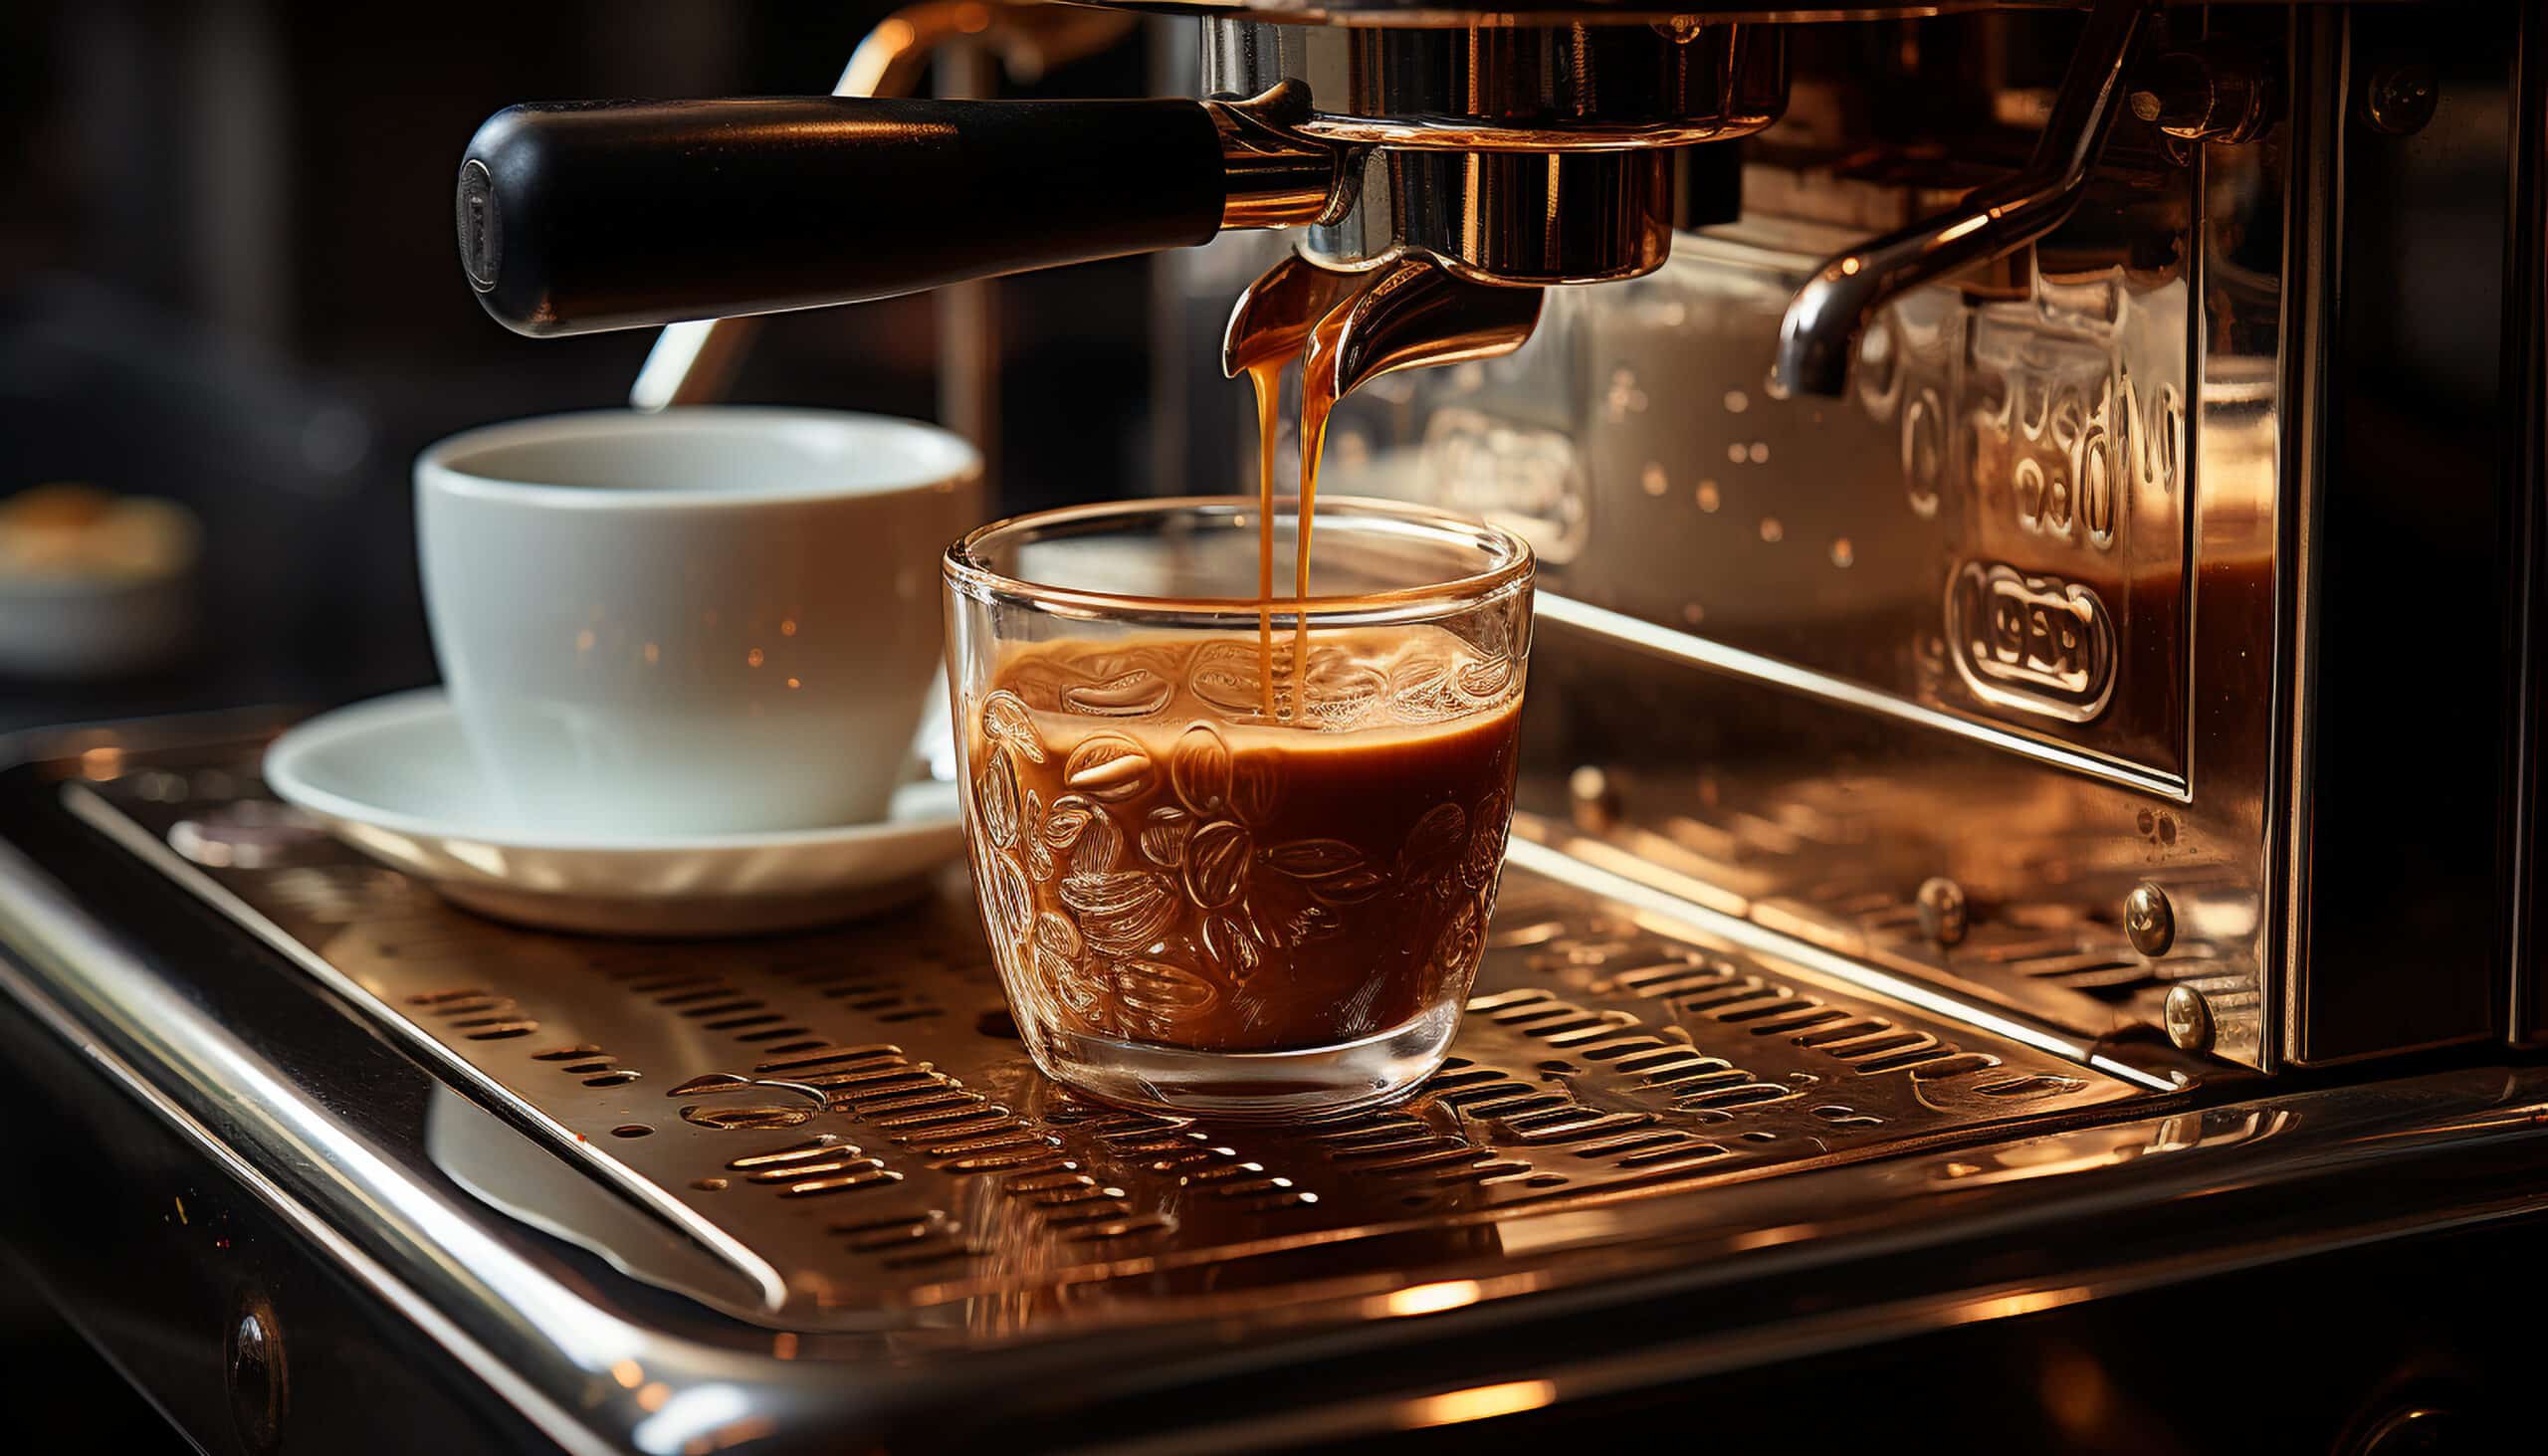 www.appr.com : How To Make An Espresso Shot Without A Machine?